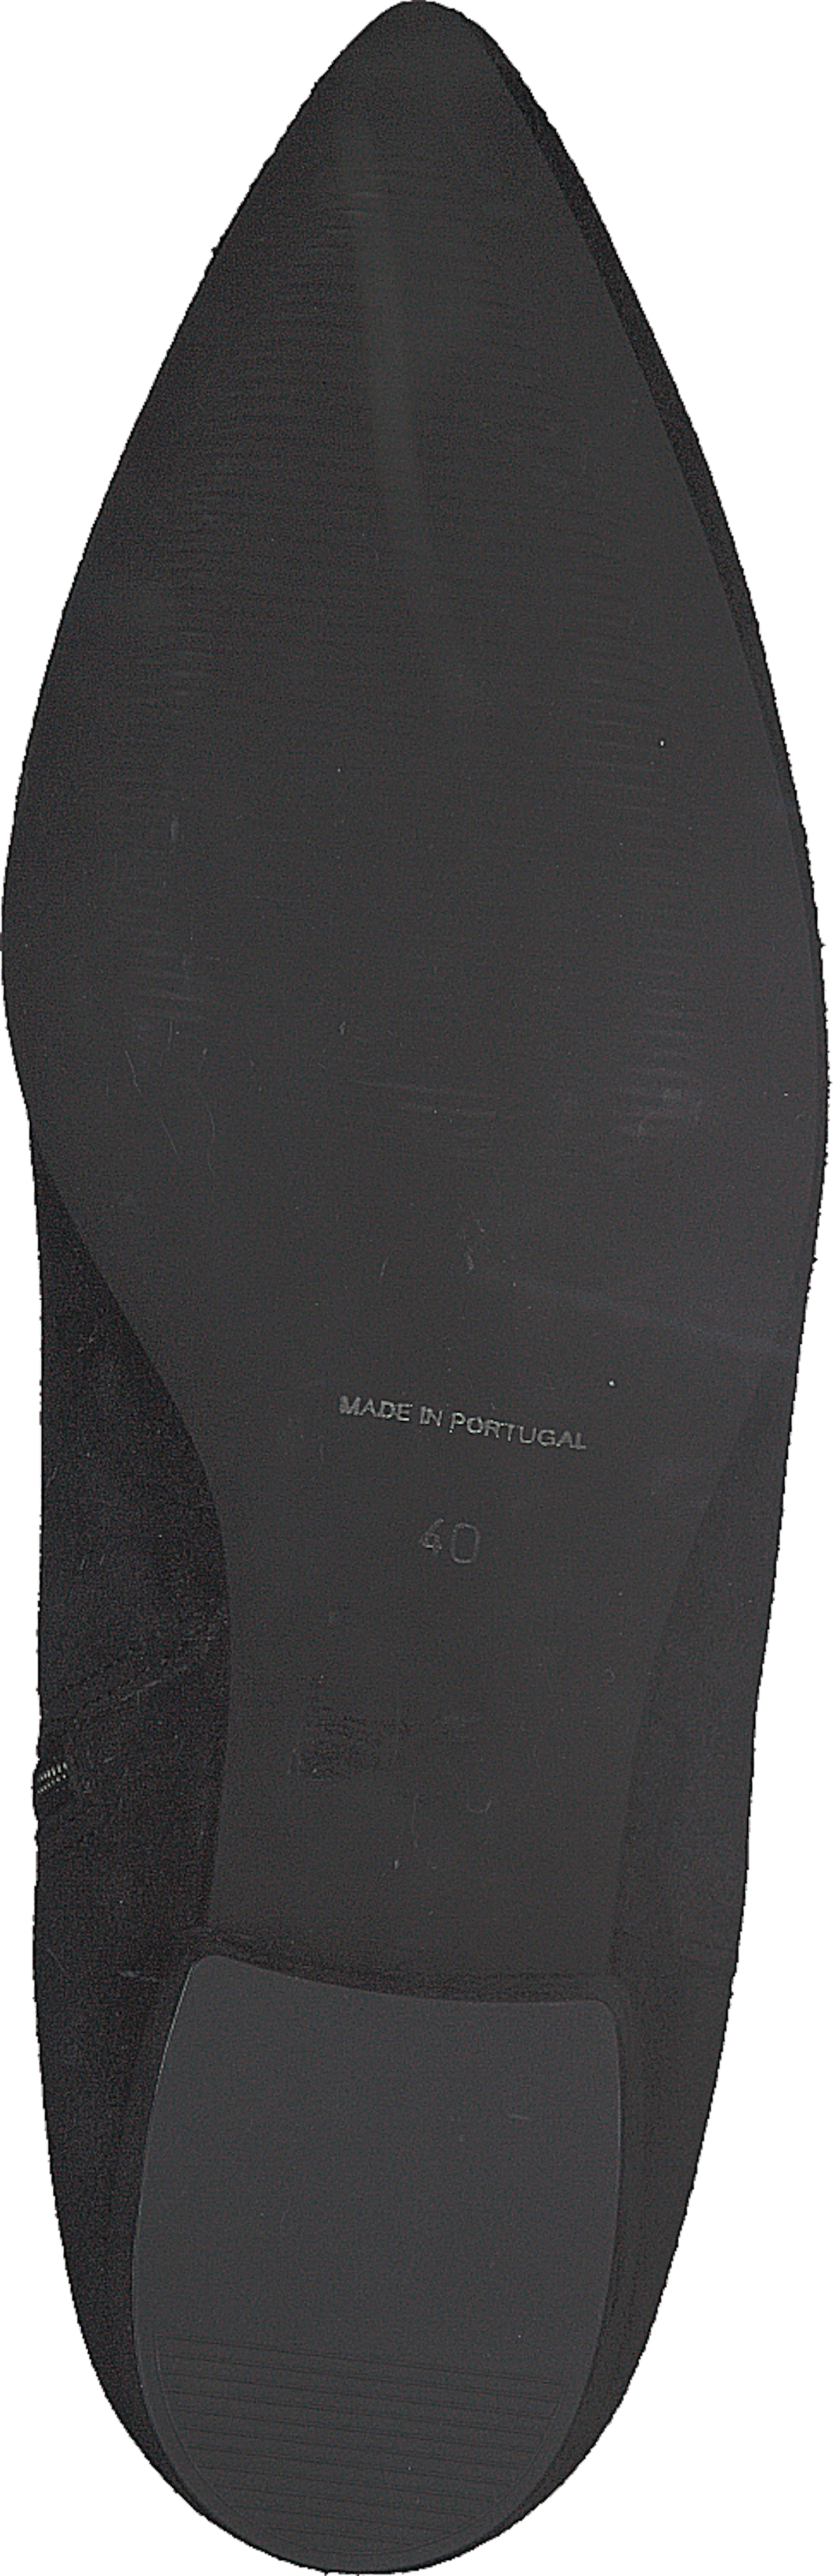 Vmastrid Leather Boot Black